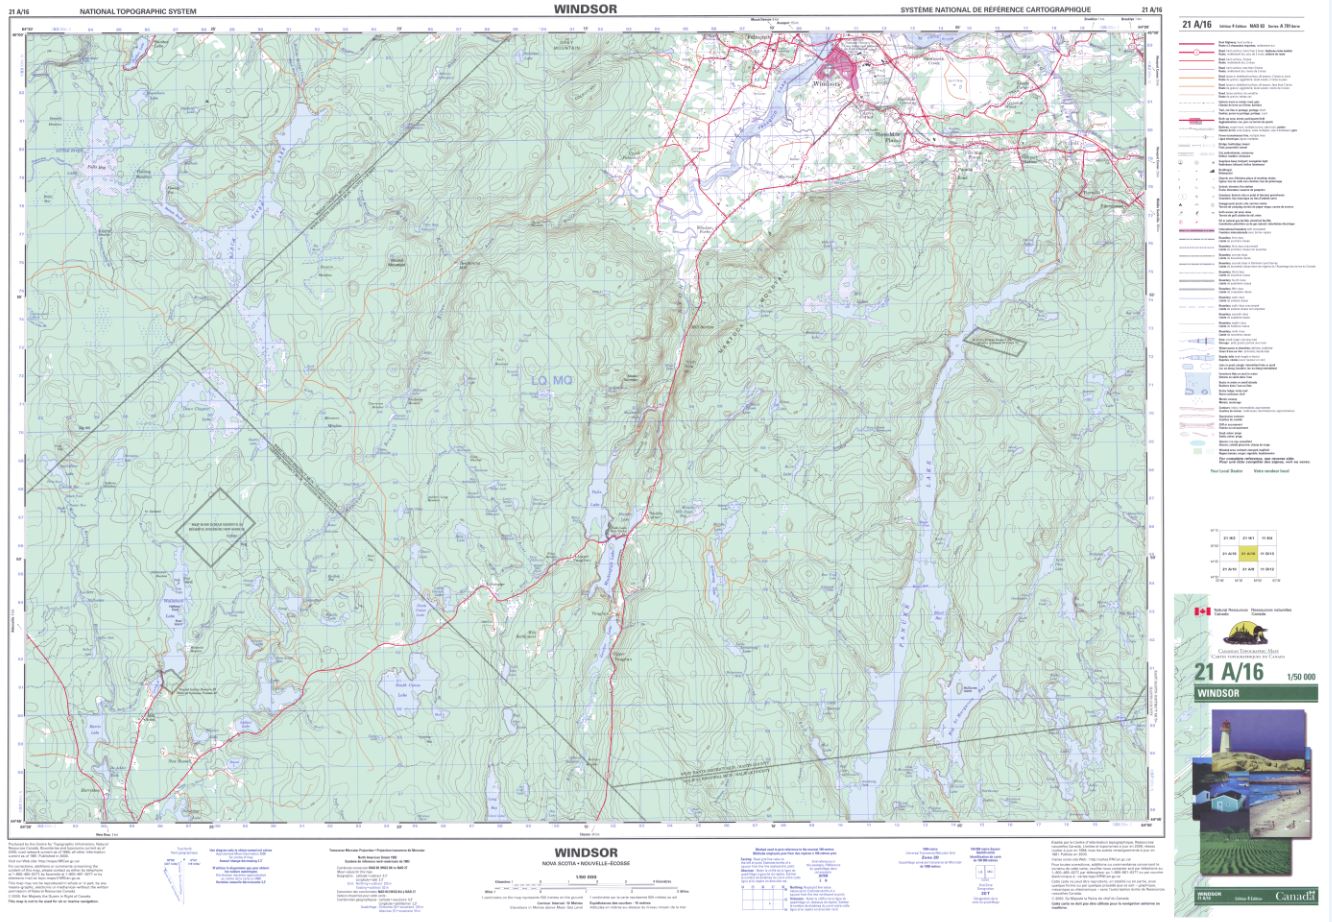 21A/16 Windsor Topographic Map Nova Scotia